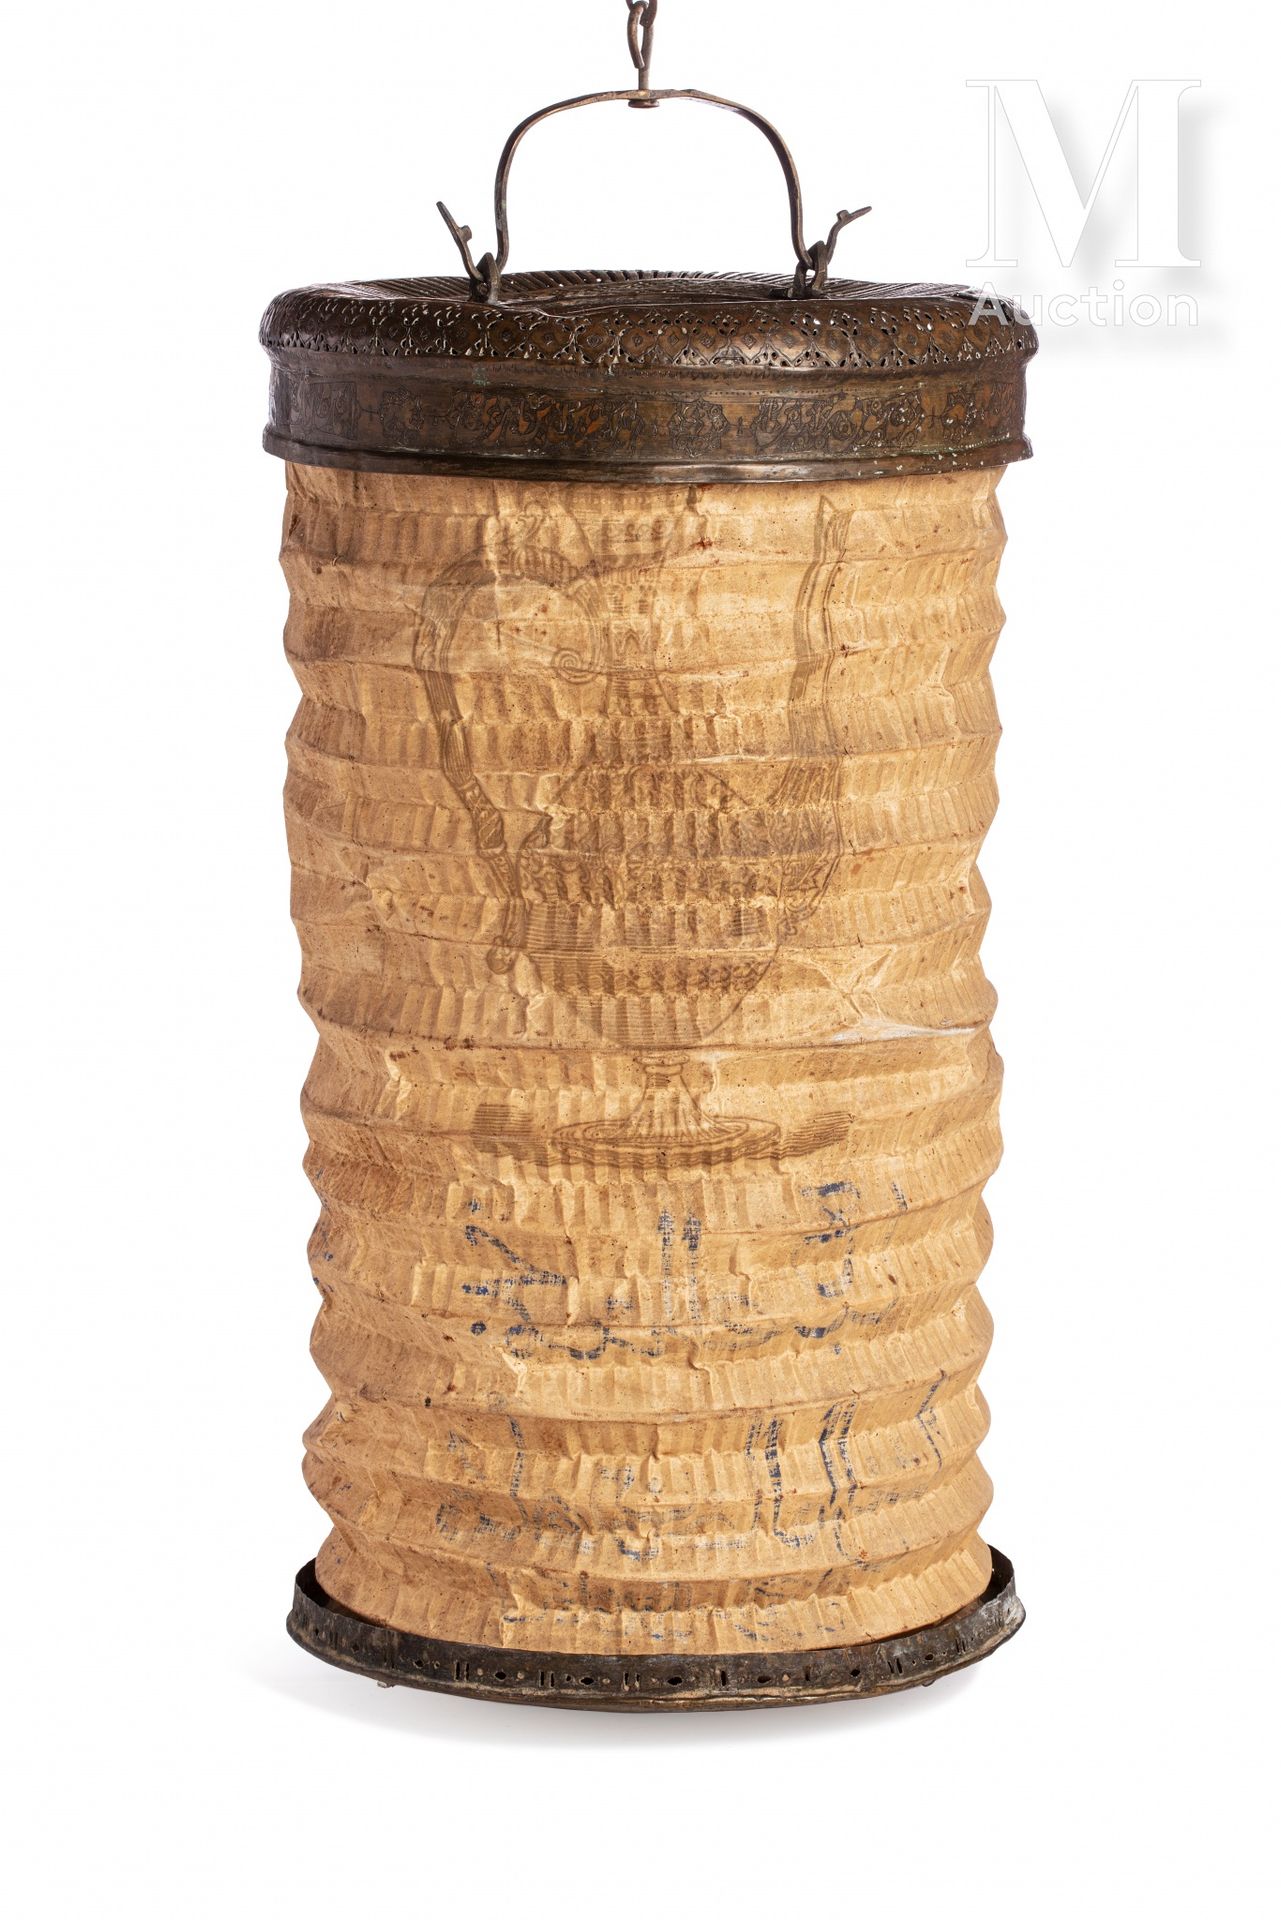 Lanterne à main - Fener Arte otomano o Qajar, siglo XIX

Cobre calado y cincelad&hellip;